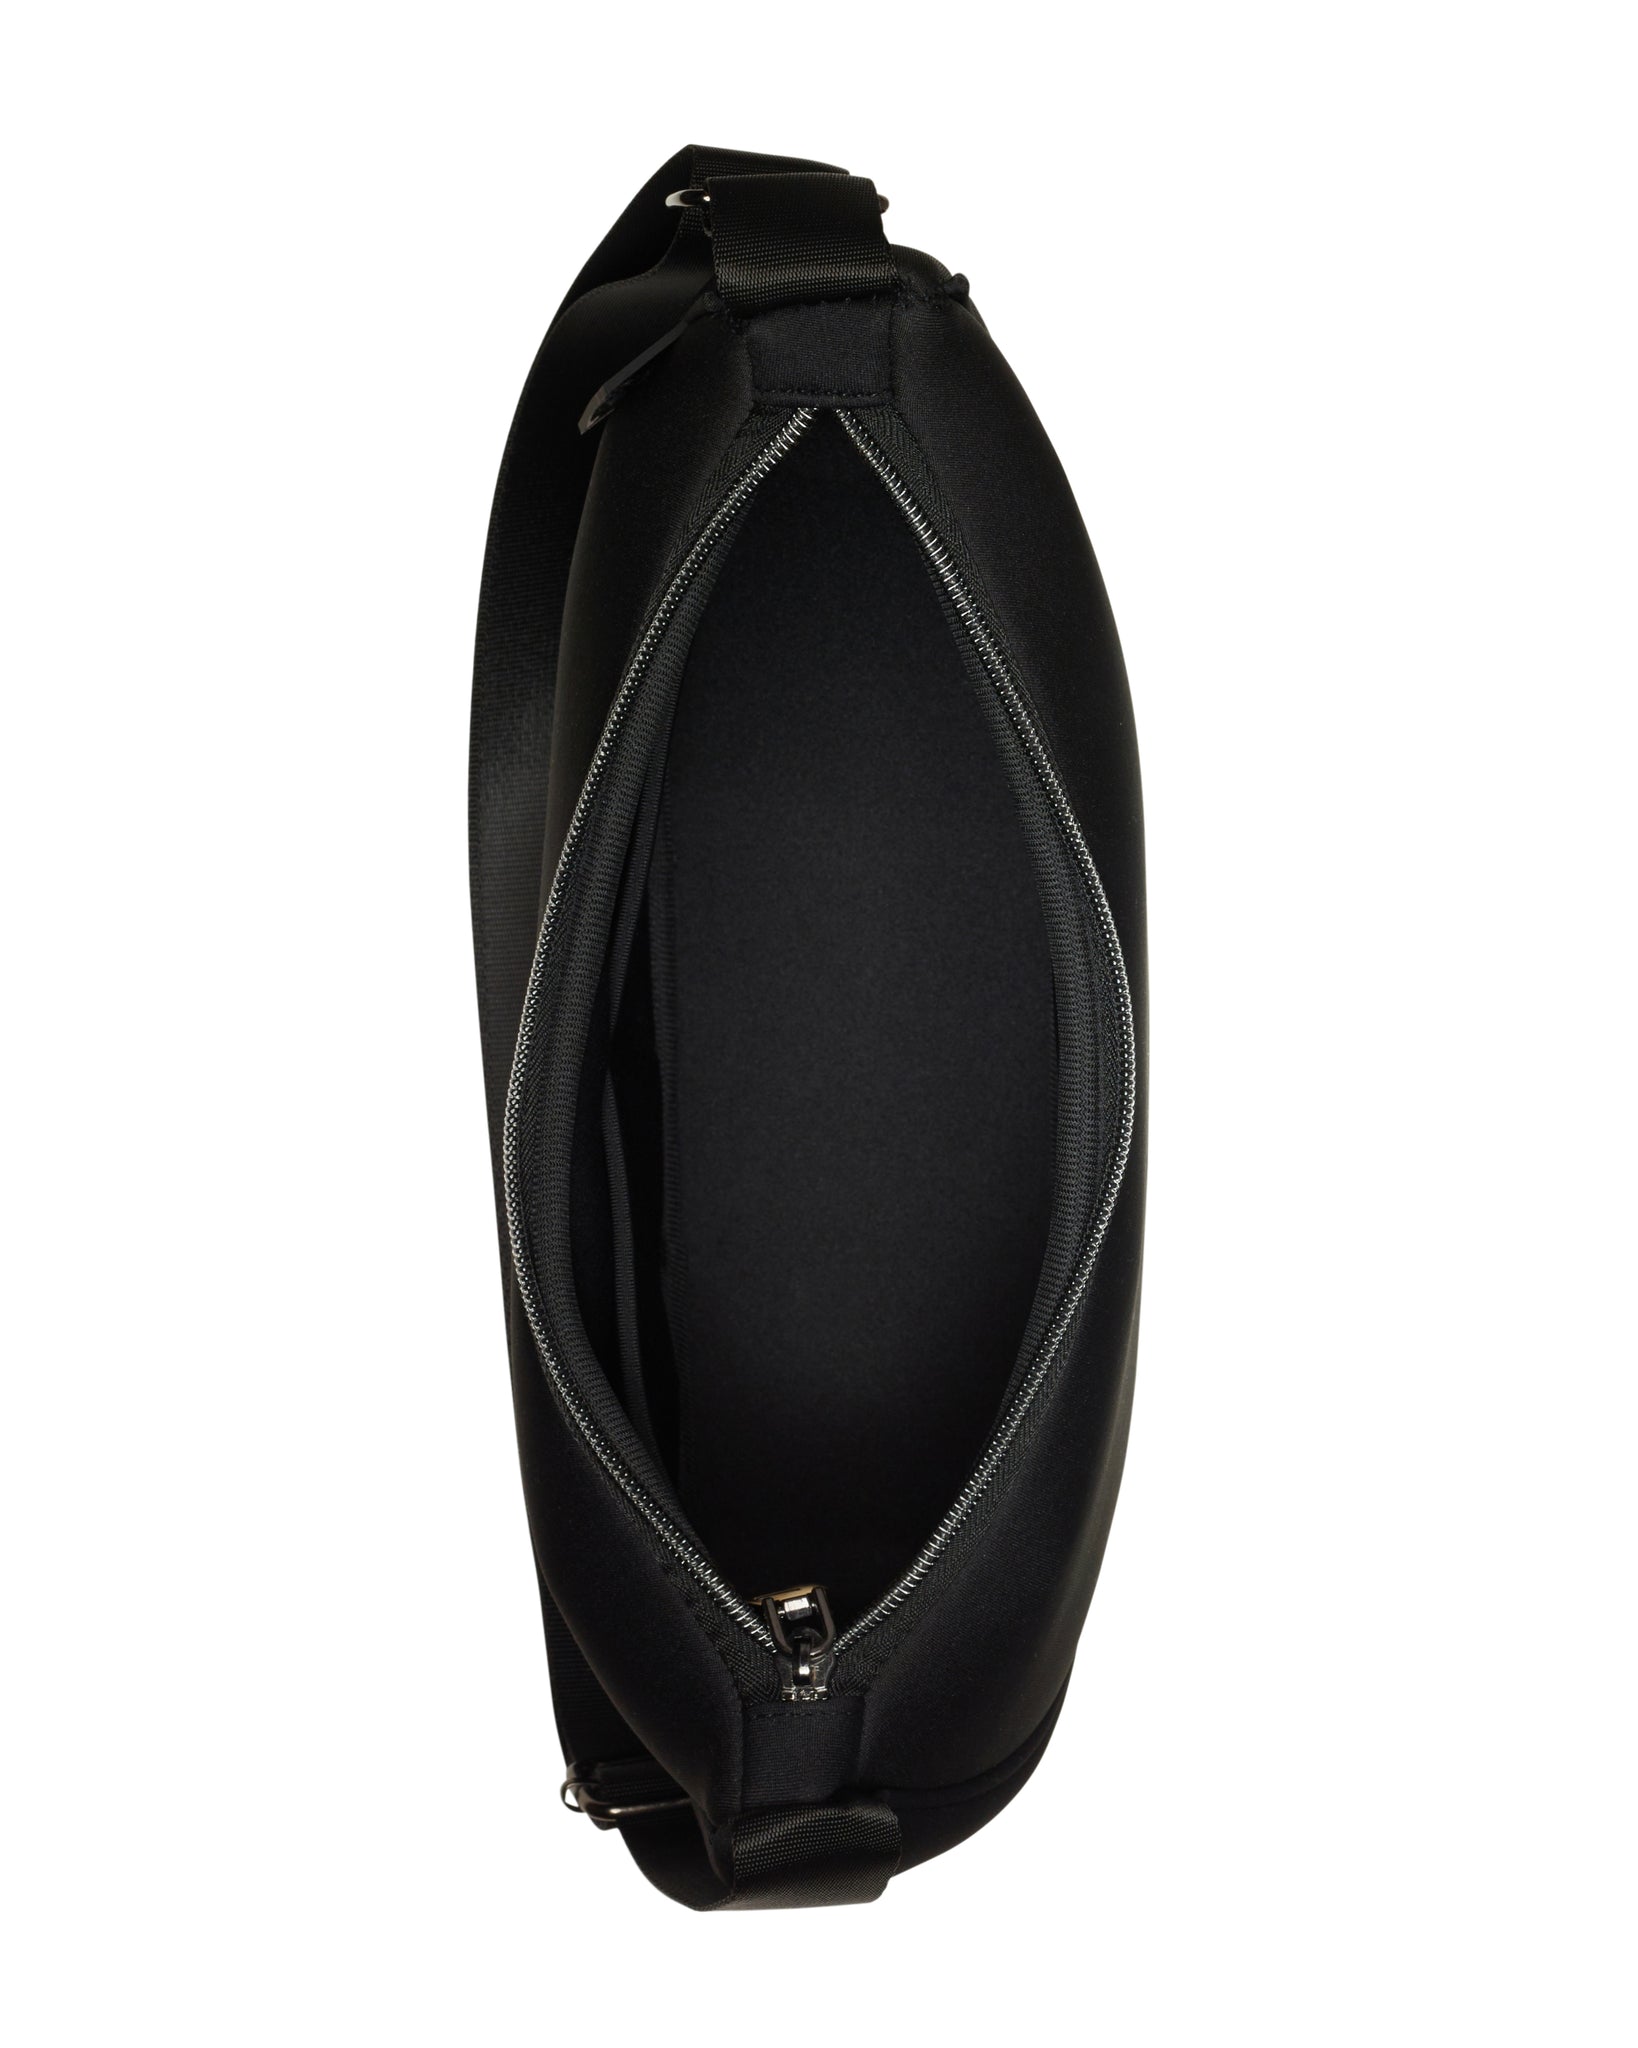 The Cara Bag (BLACK) Neoprene Crossbody Bag